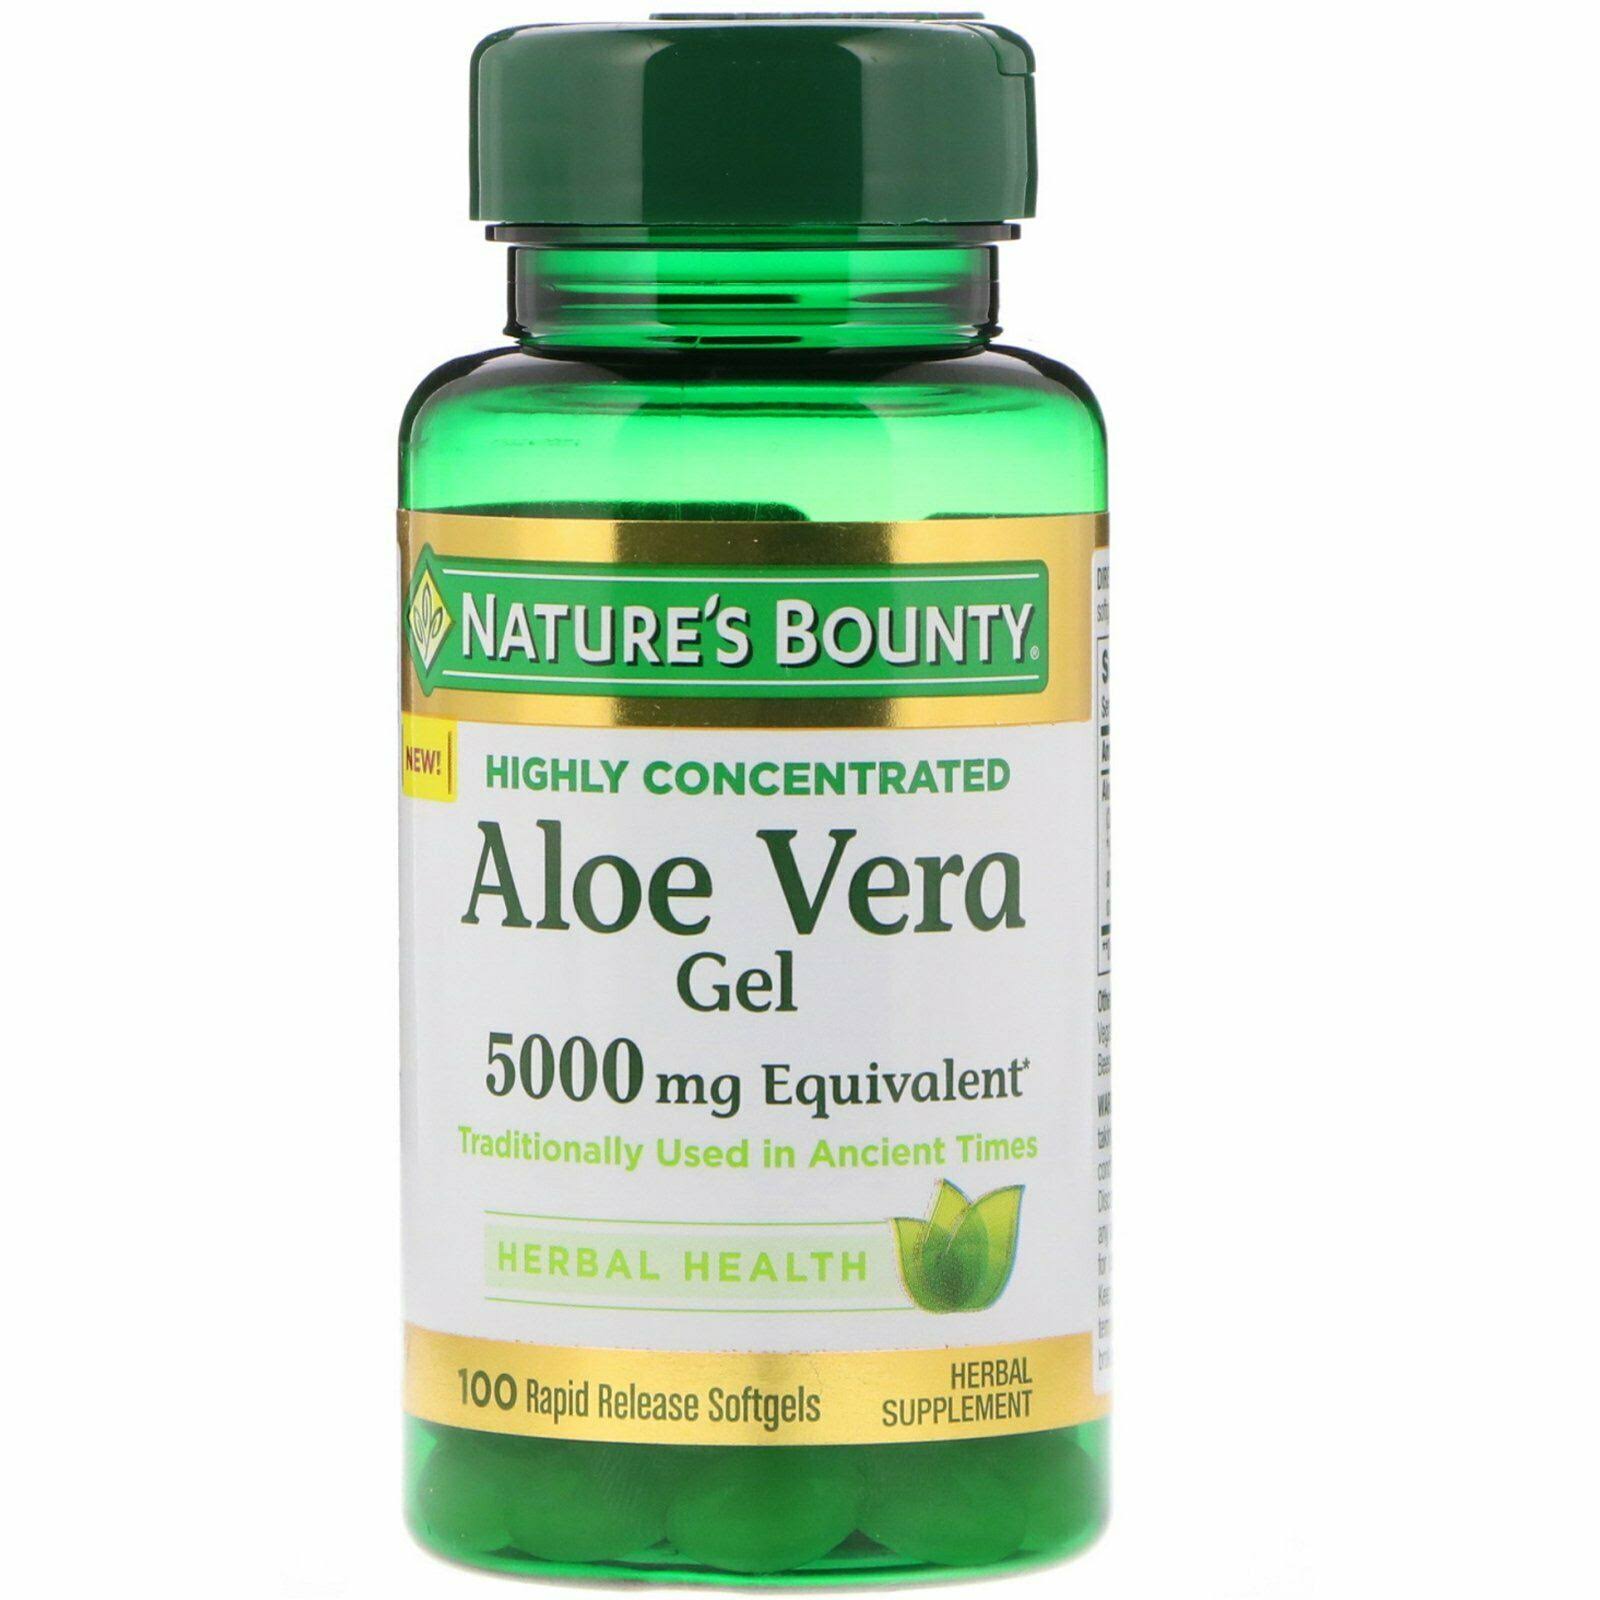 Nature's Bounty Aloe Vera Gel Supplement - 5000mg, 100 Softgels